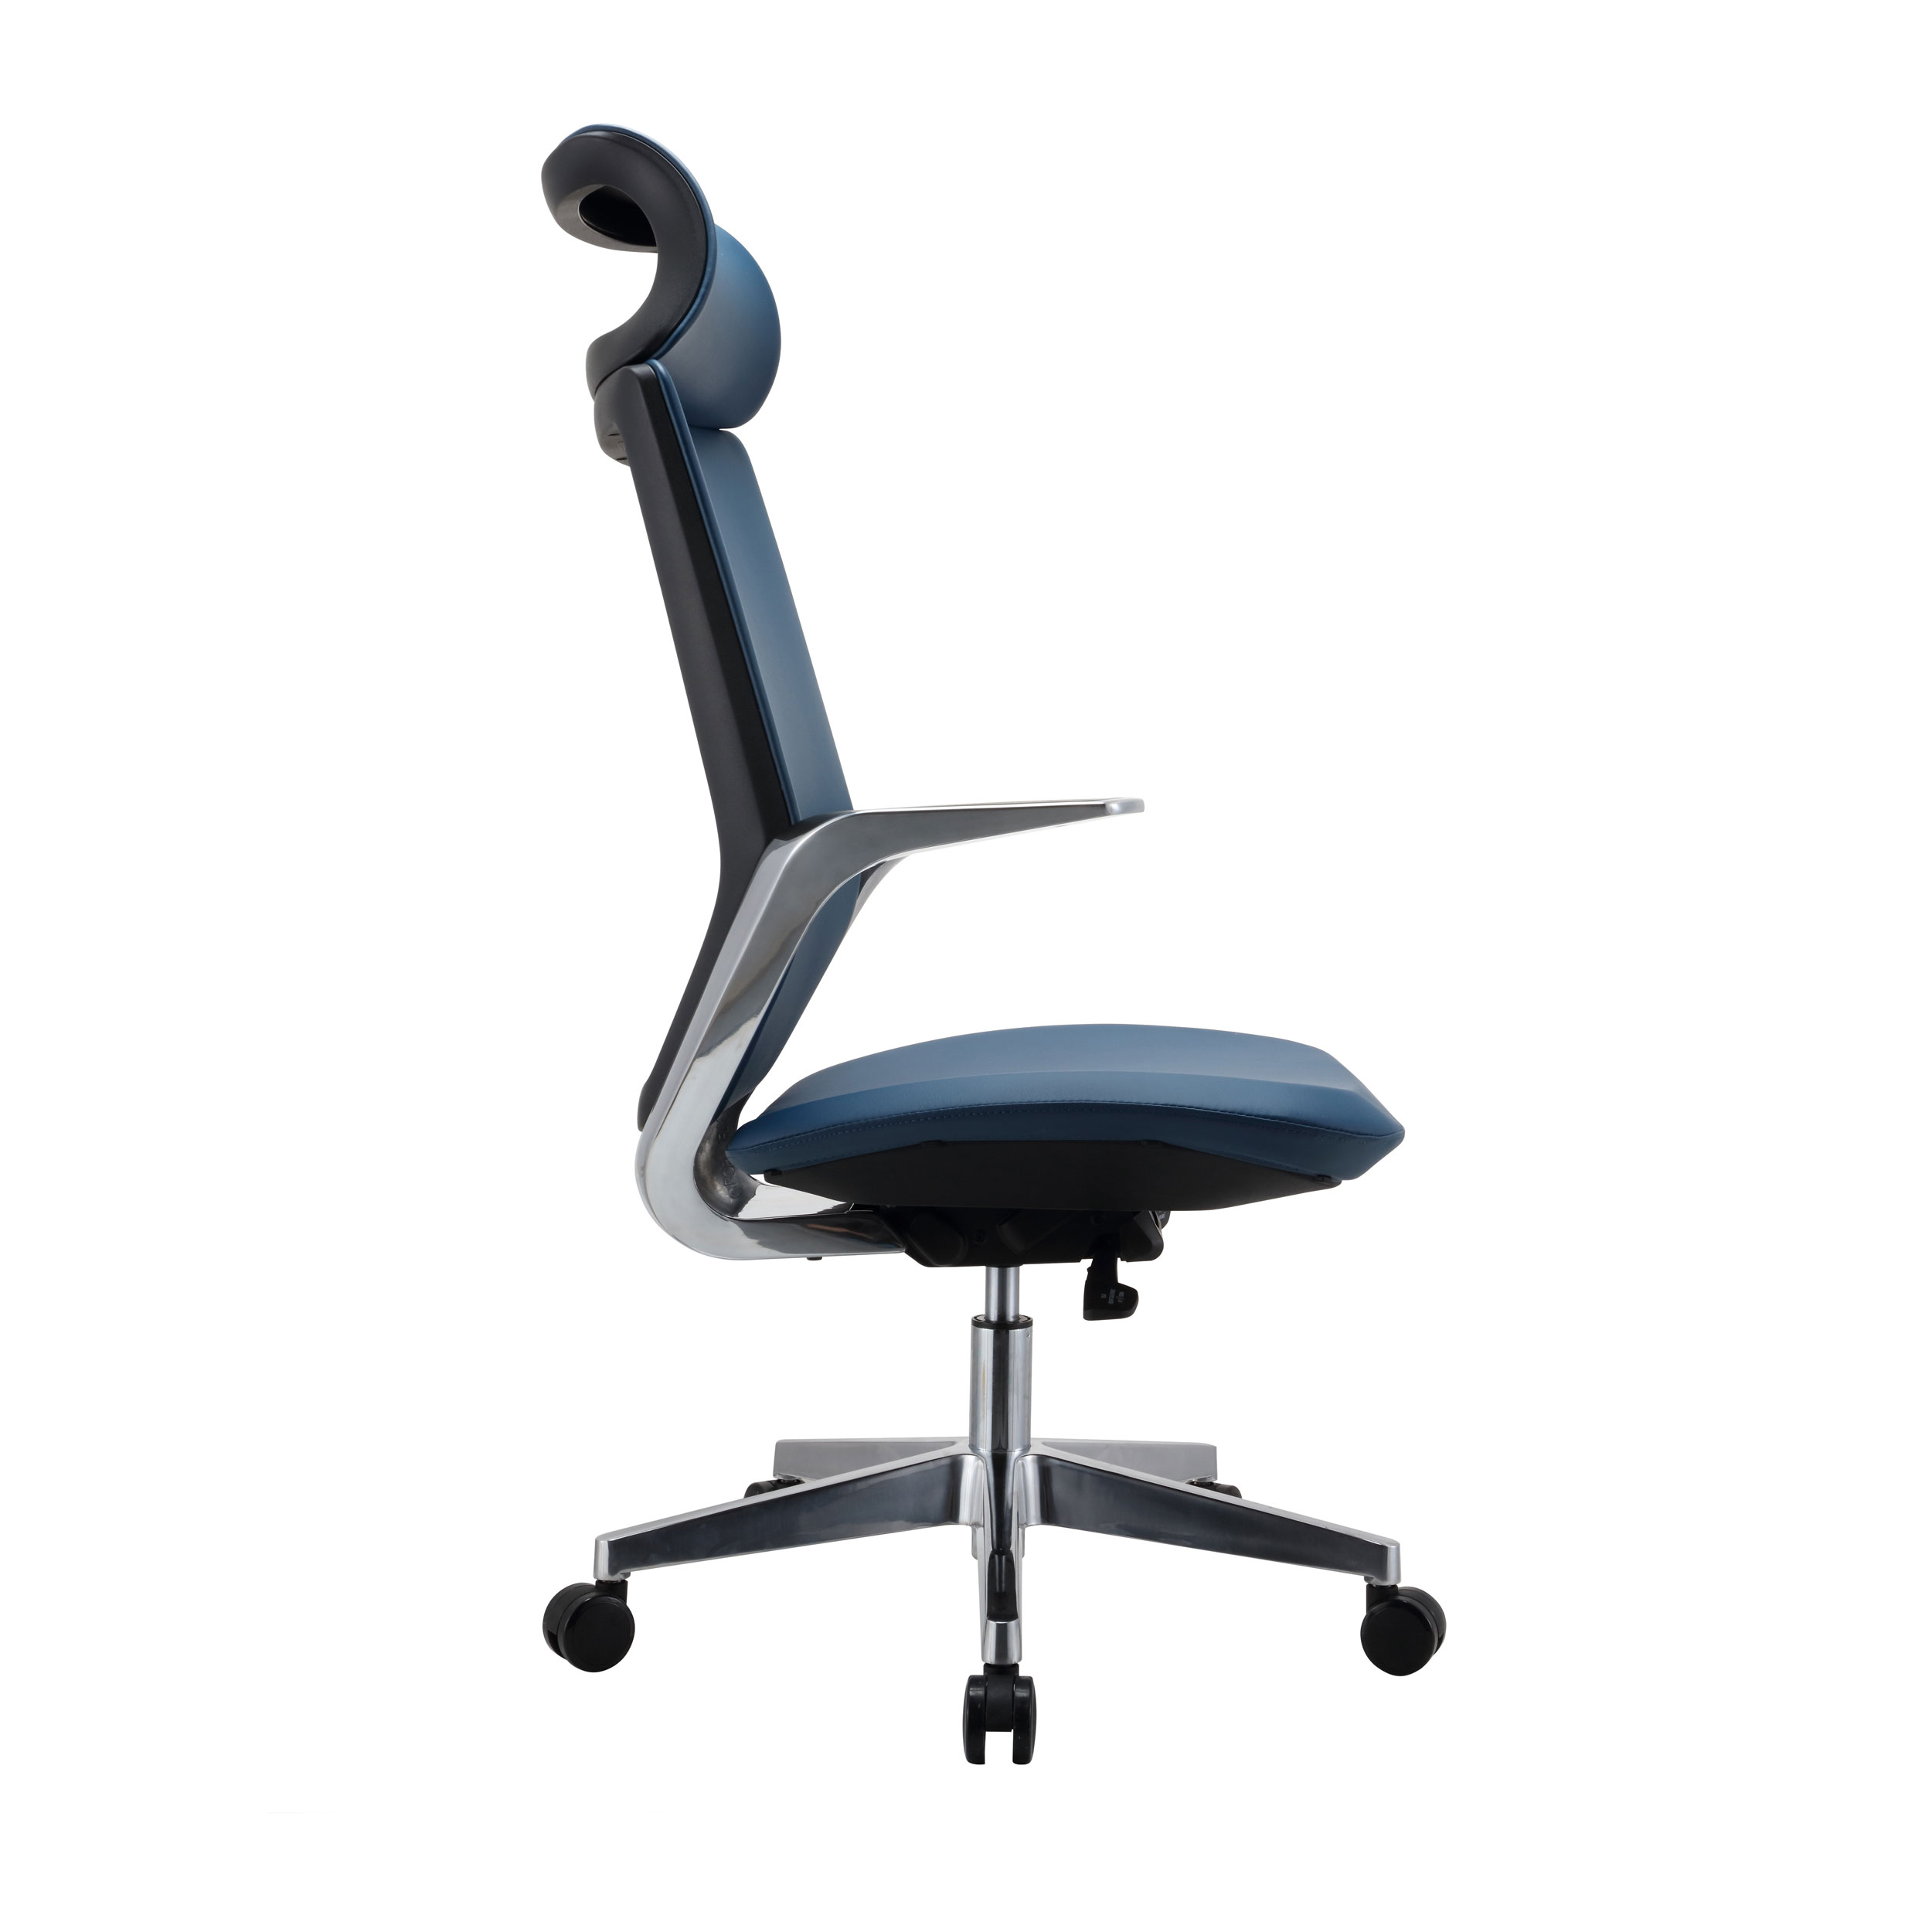 Side Profile of Flow Desk chair